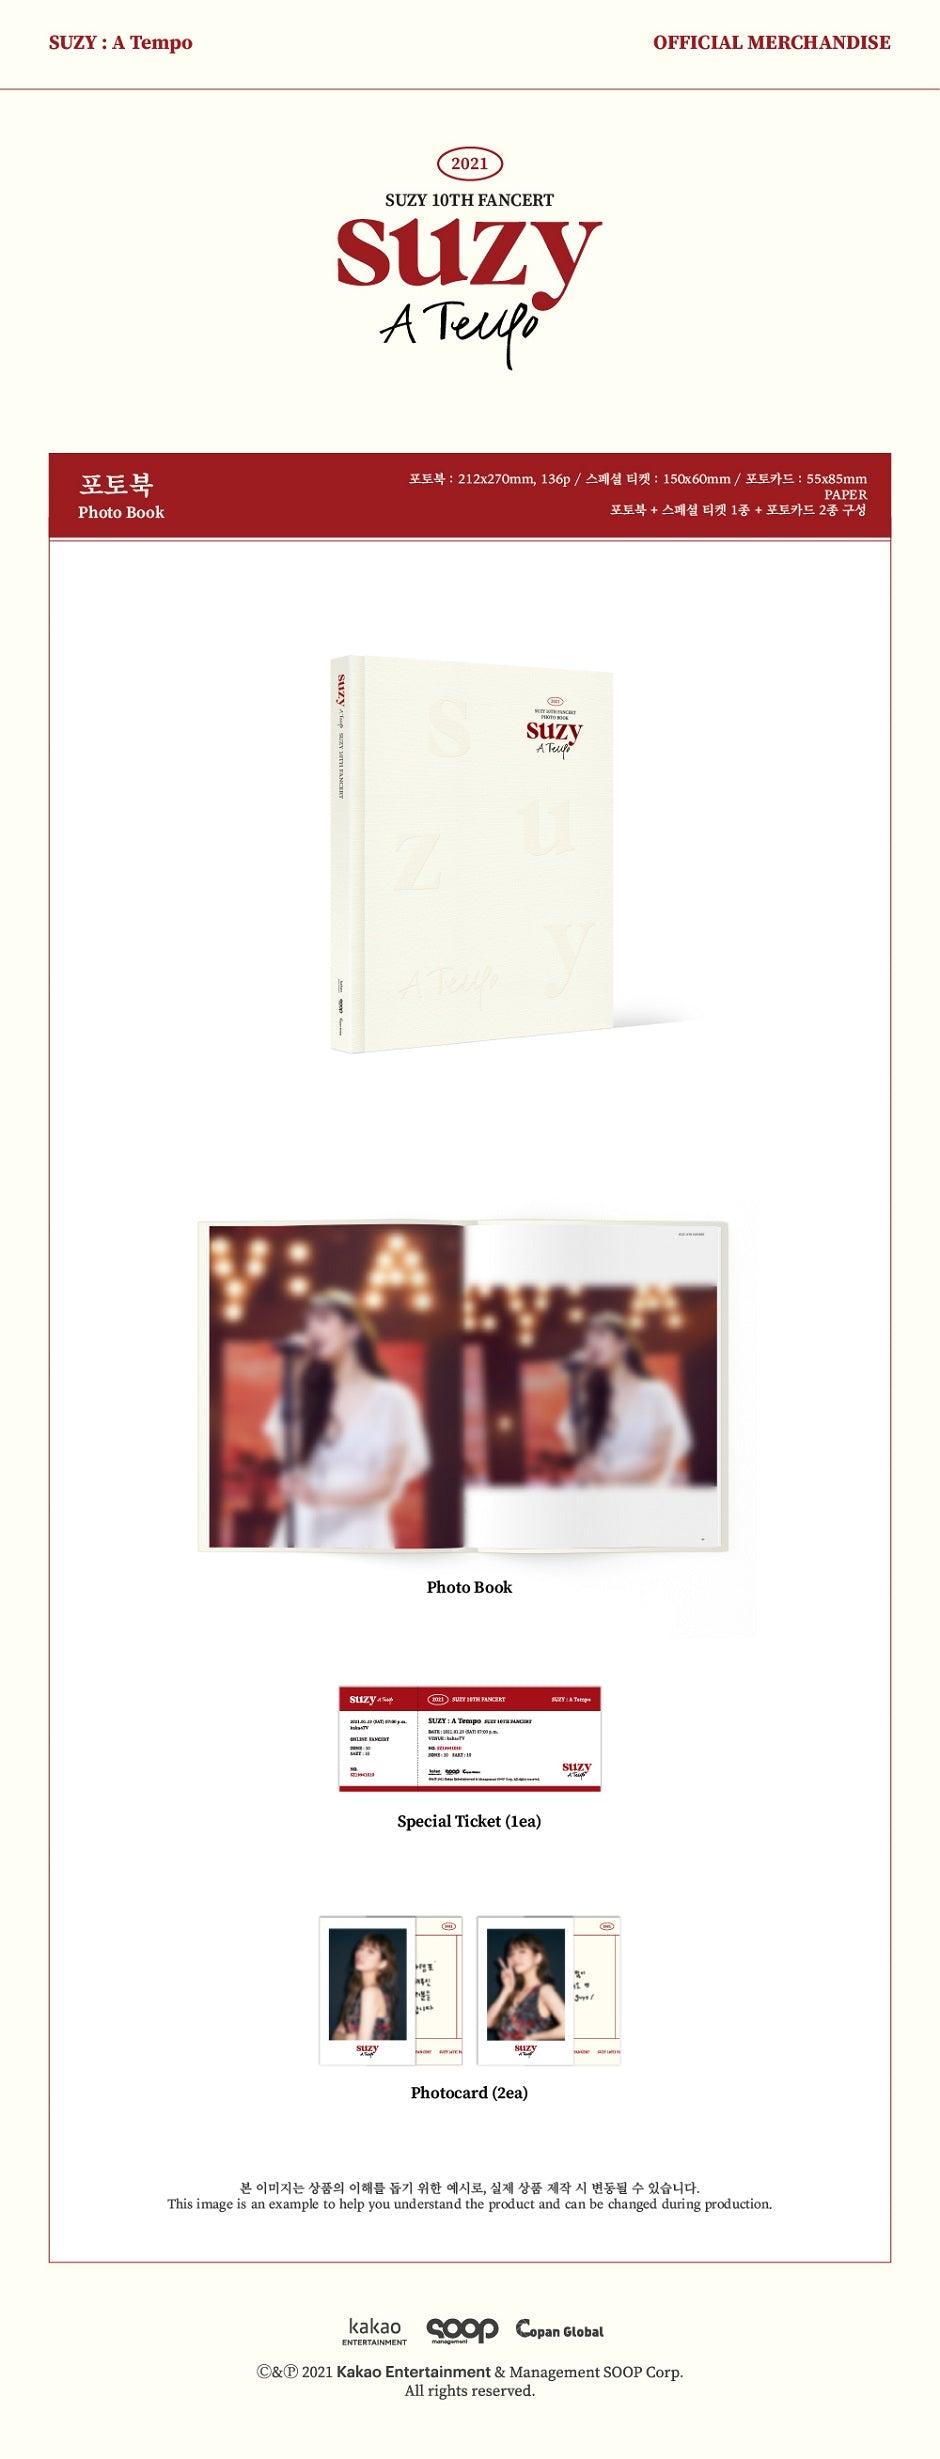 K-Pop Suzy - 10th Fancert Photobook 'A Tempo'